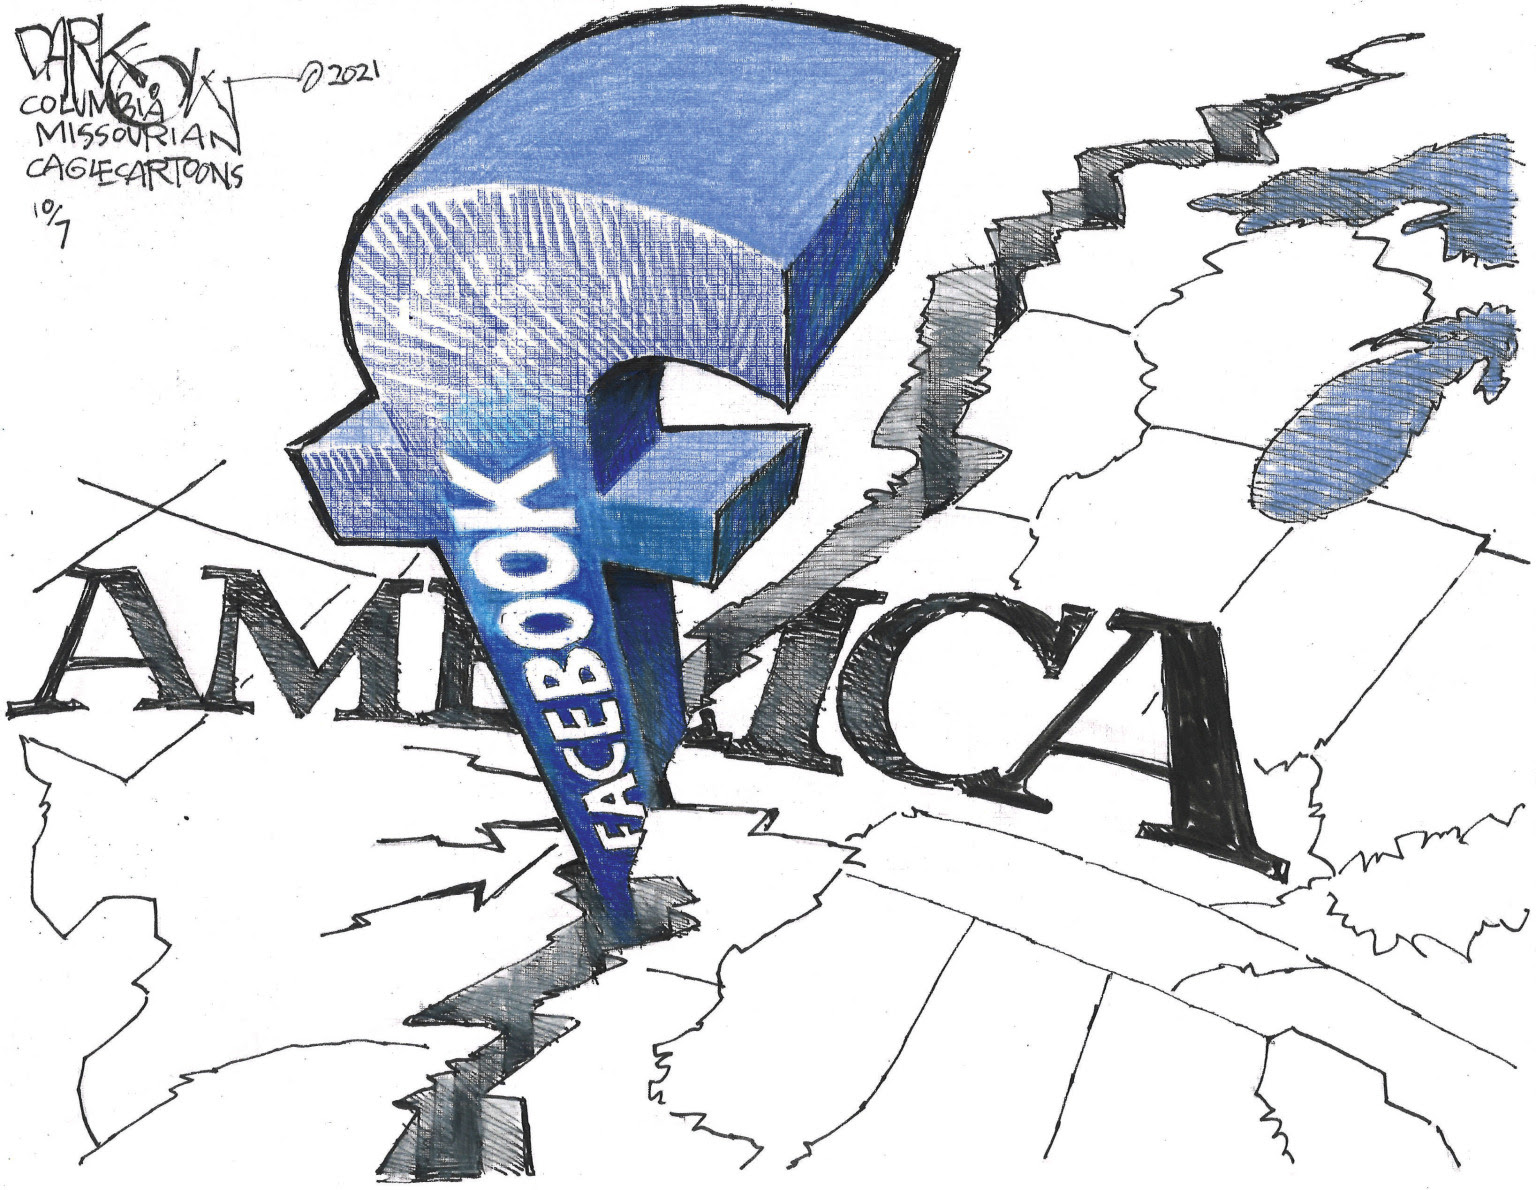 Facebook dividing America